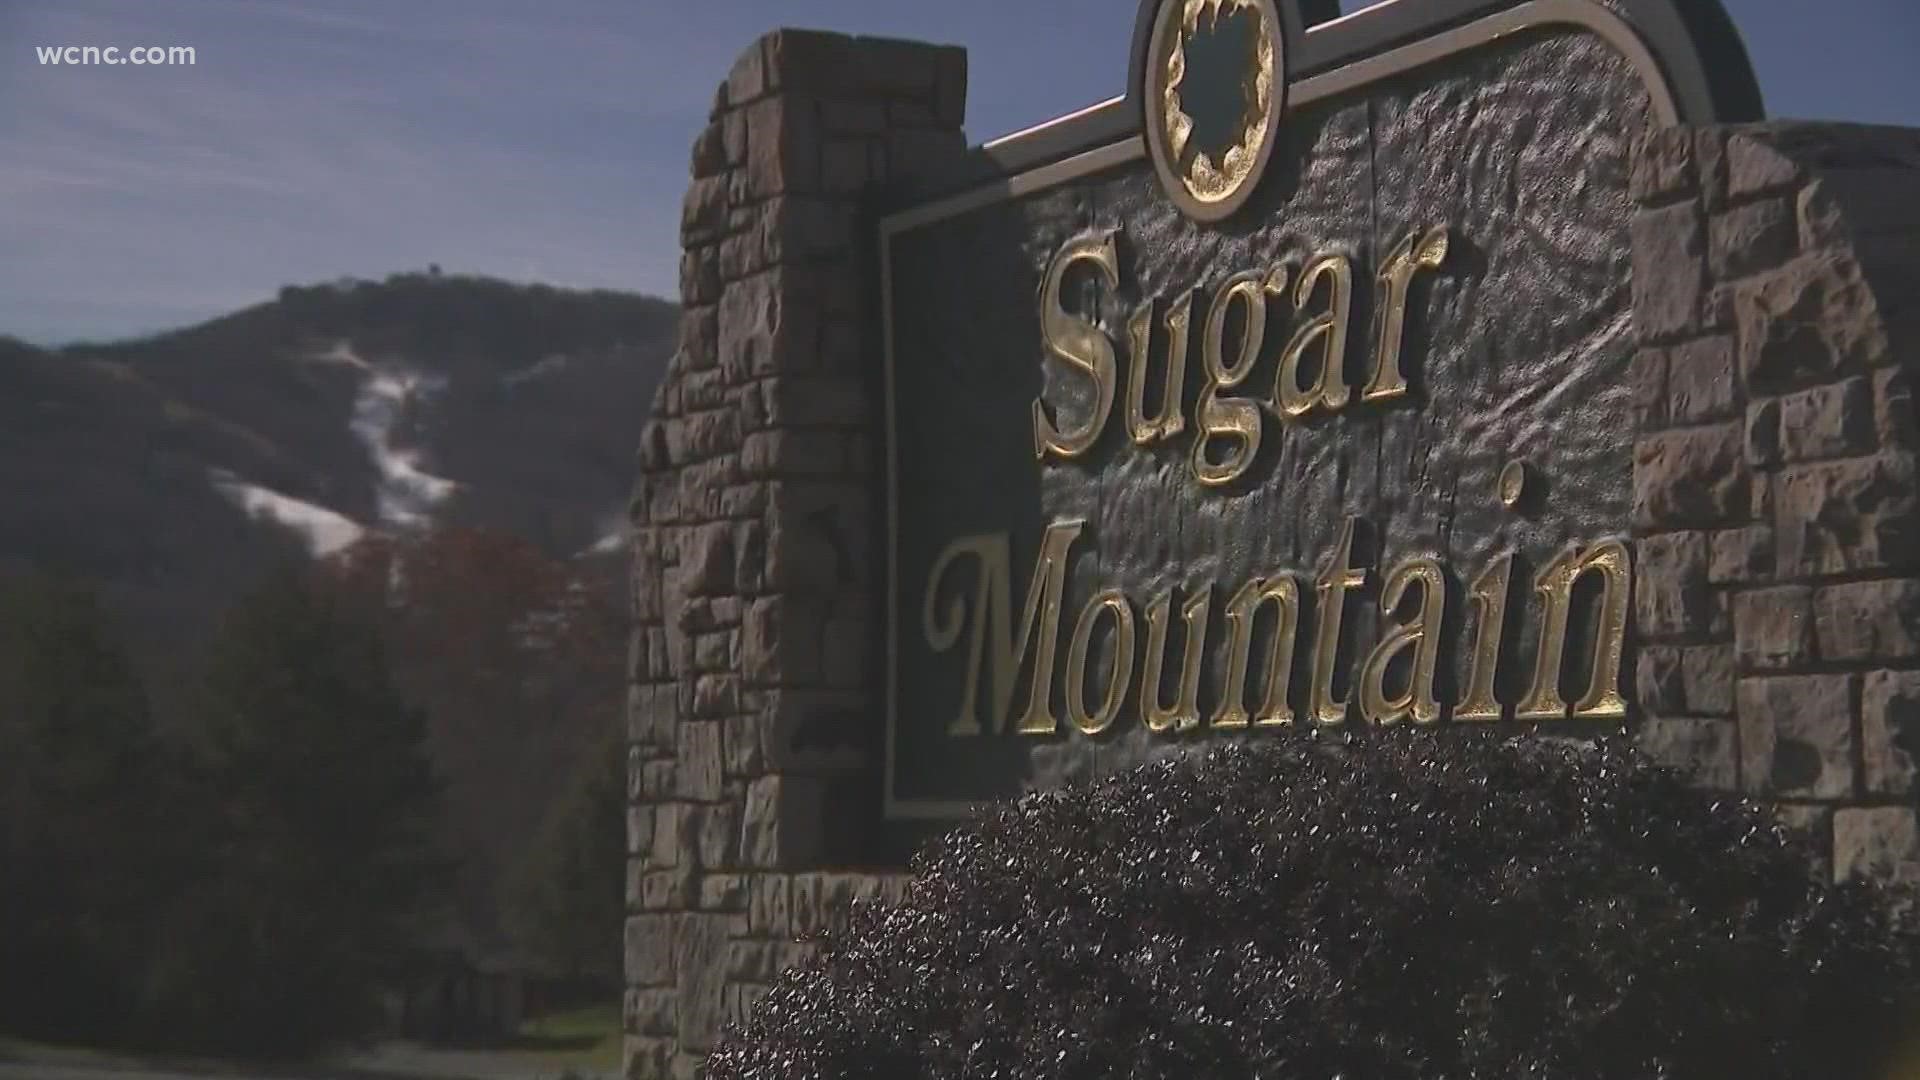 Sugar mountain ski resort is open today.